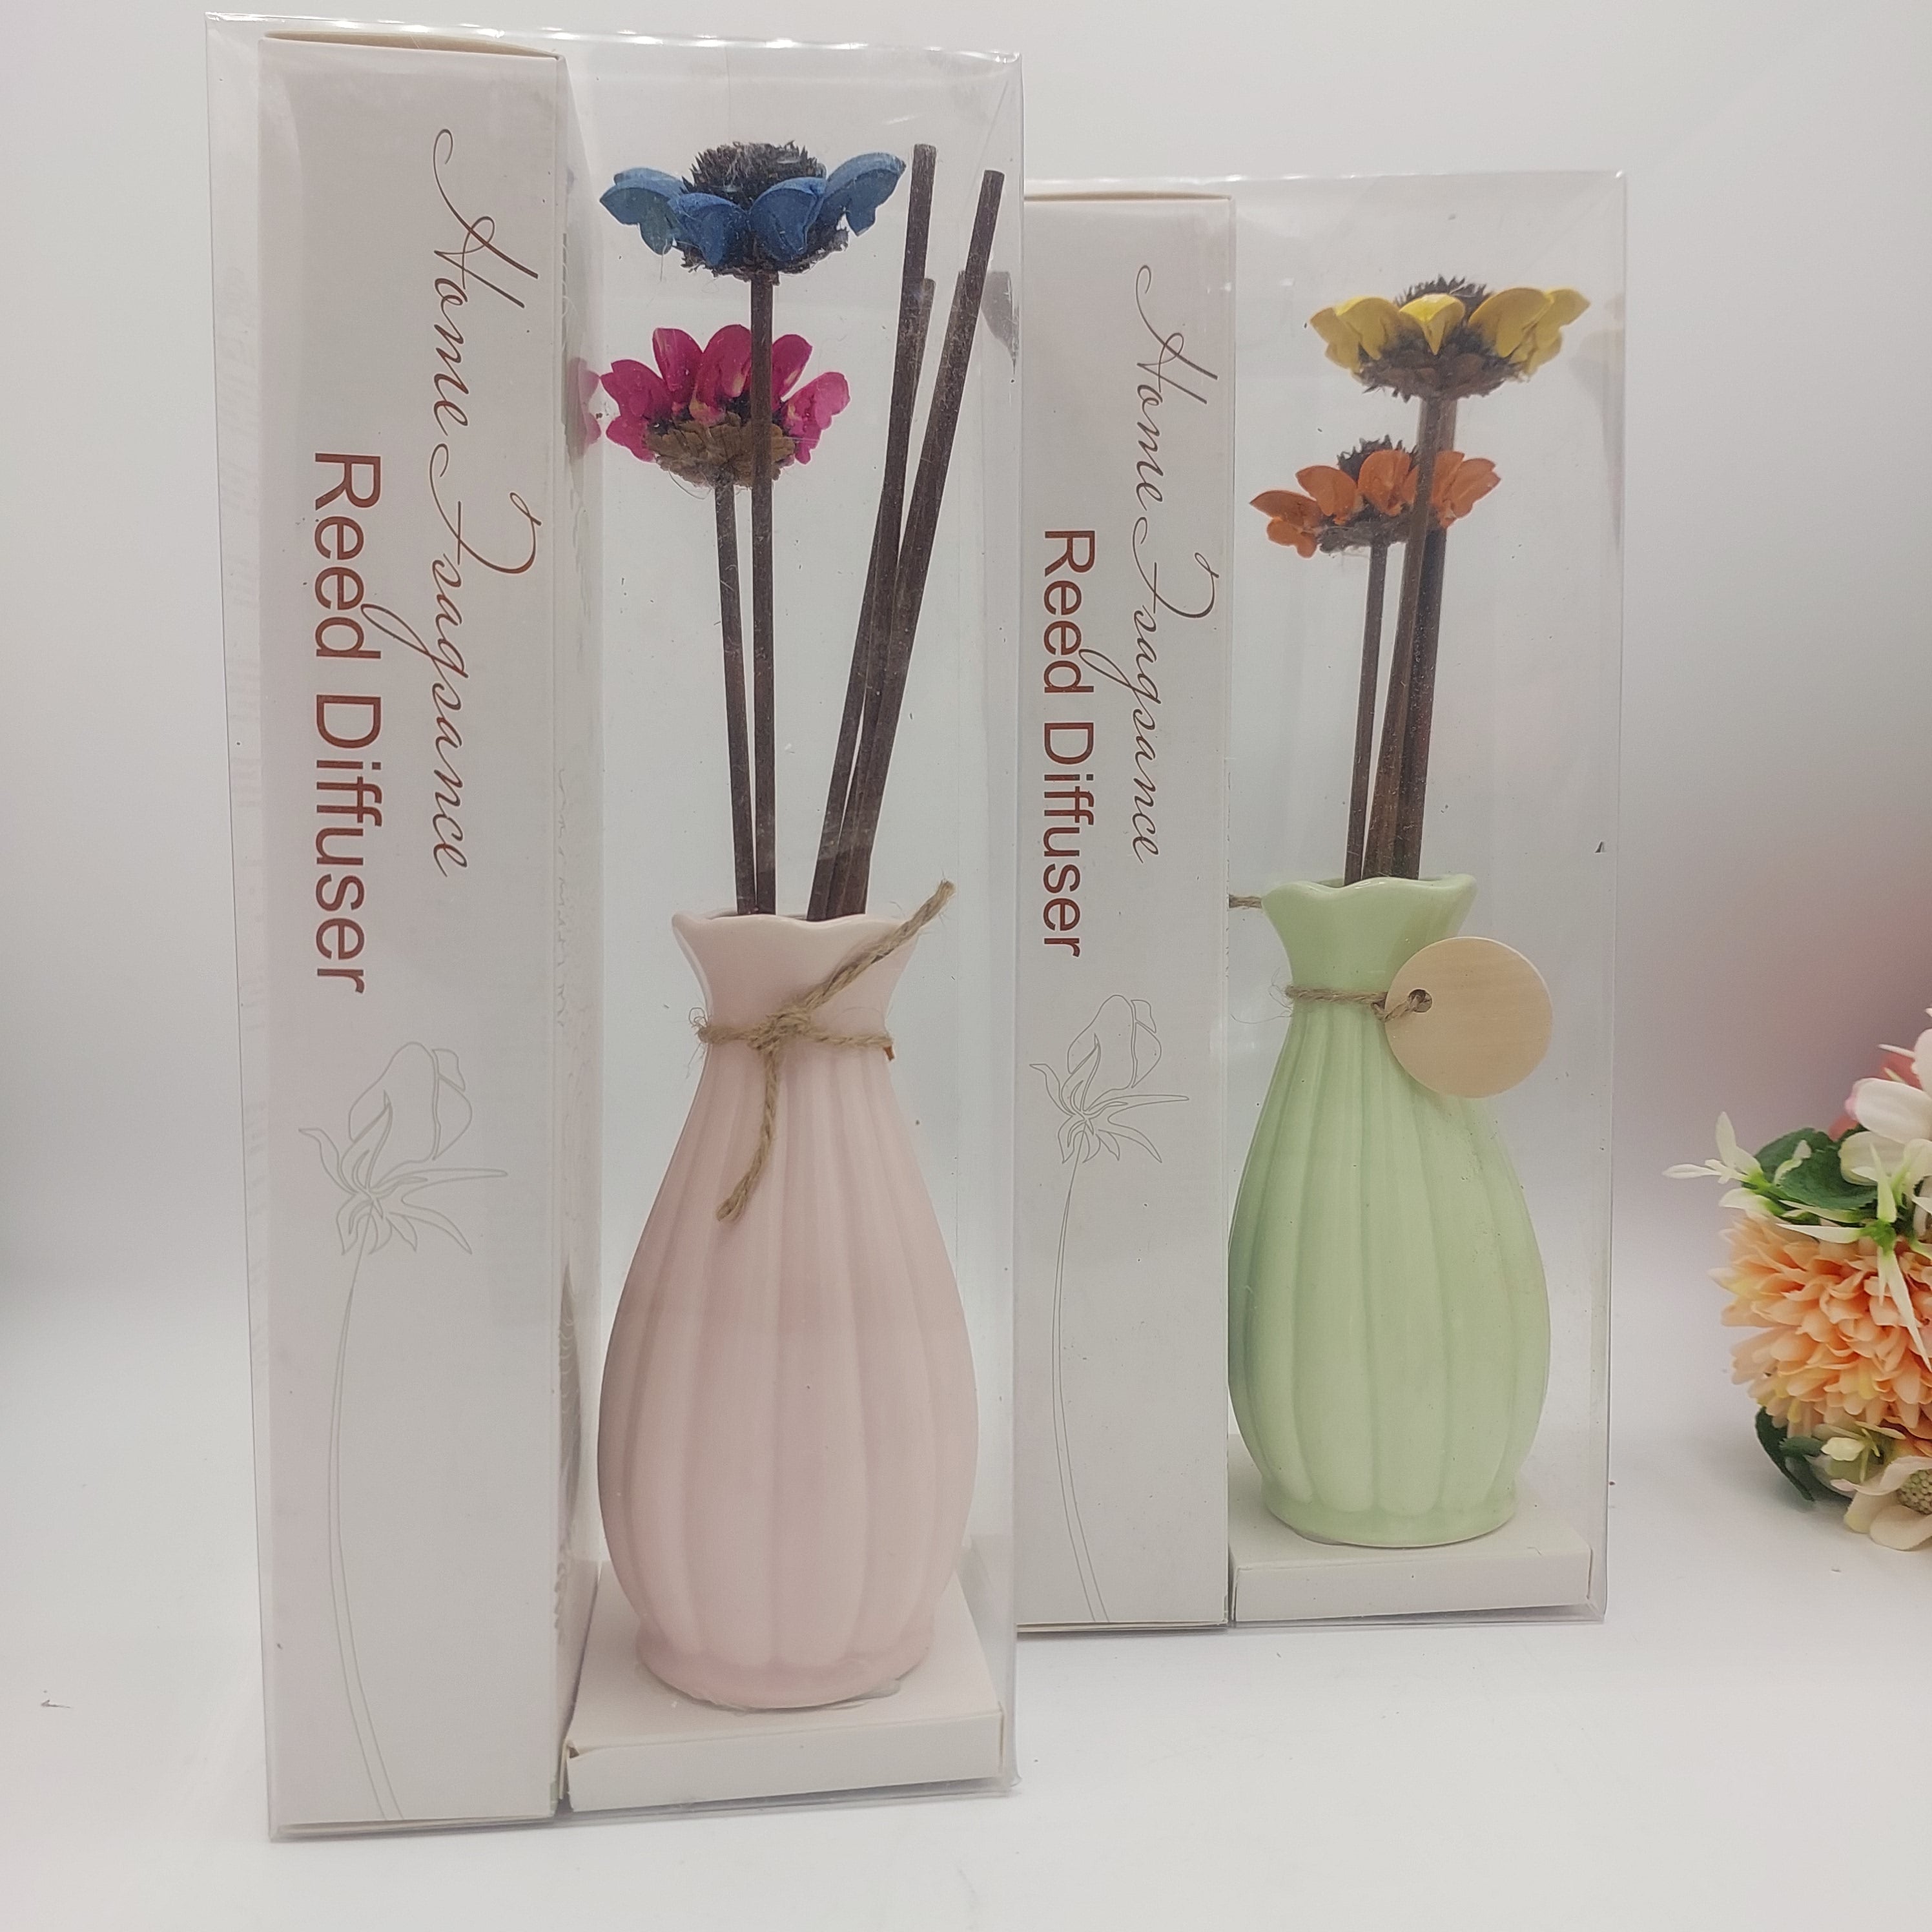 Fresh Fir Diffuser Fragrance & Reeds — Skeem Design